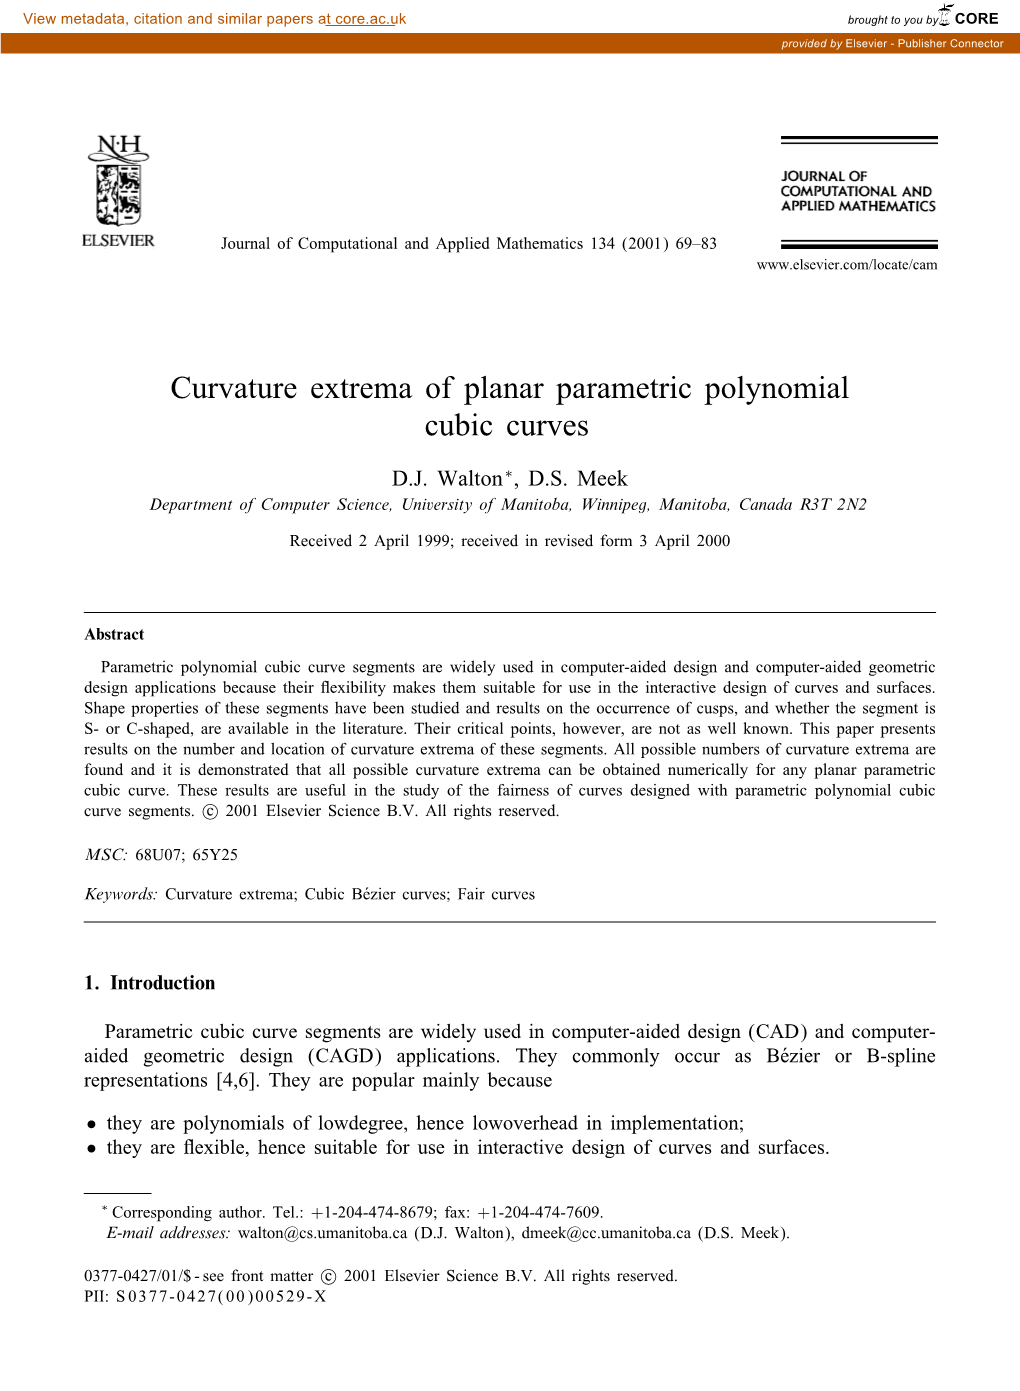 Curvature Extrema of Planar Parametric Polynomial Cubic Curves